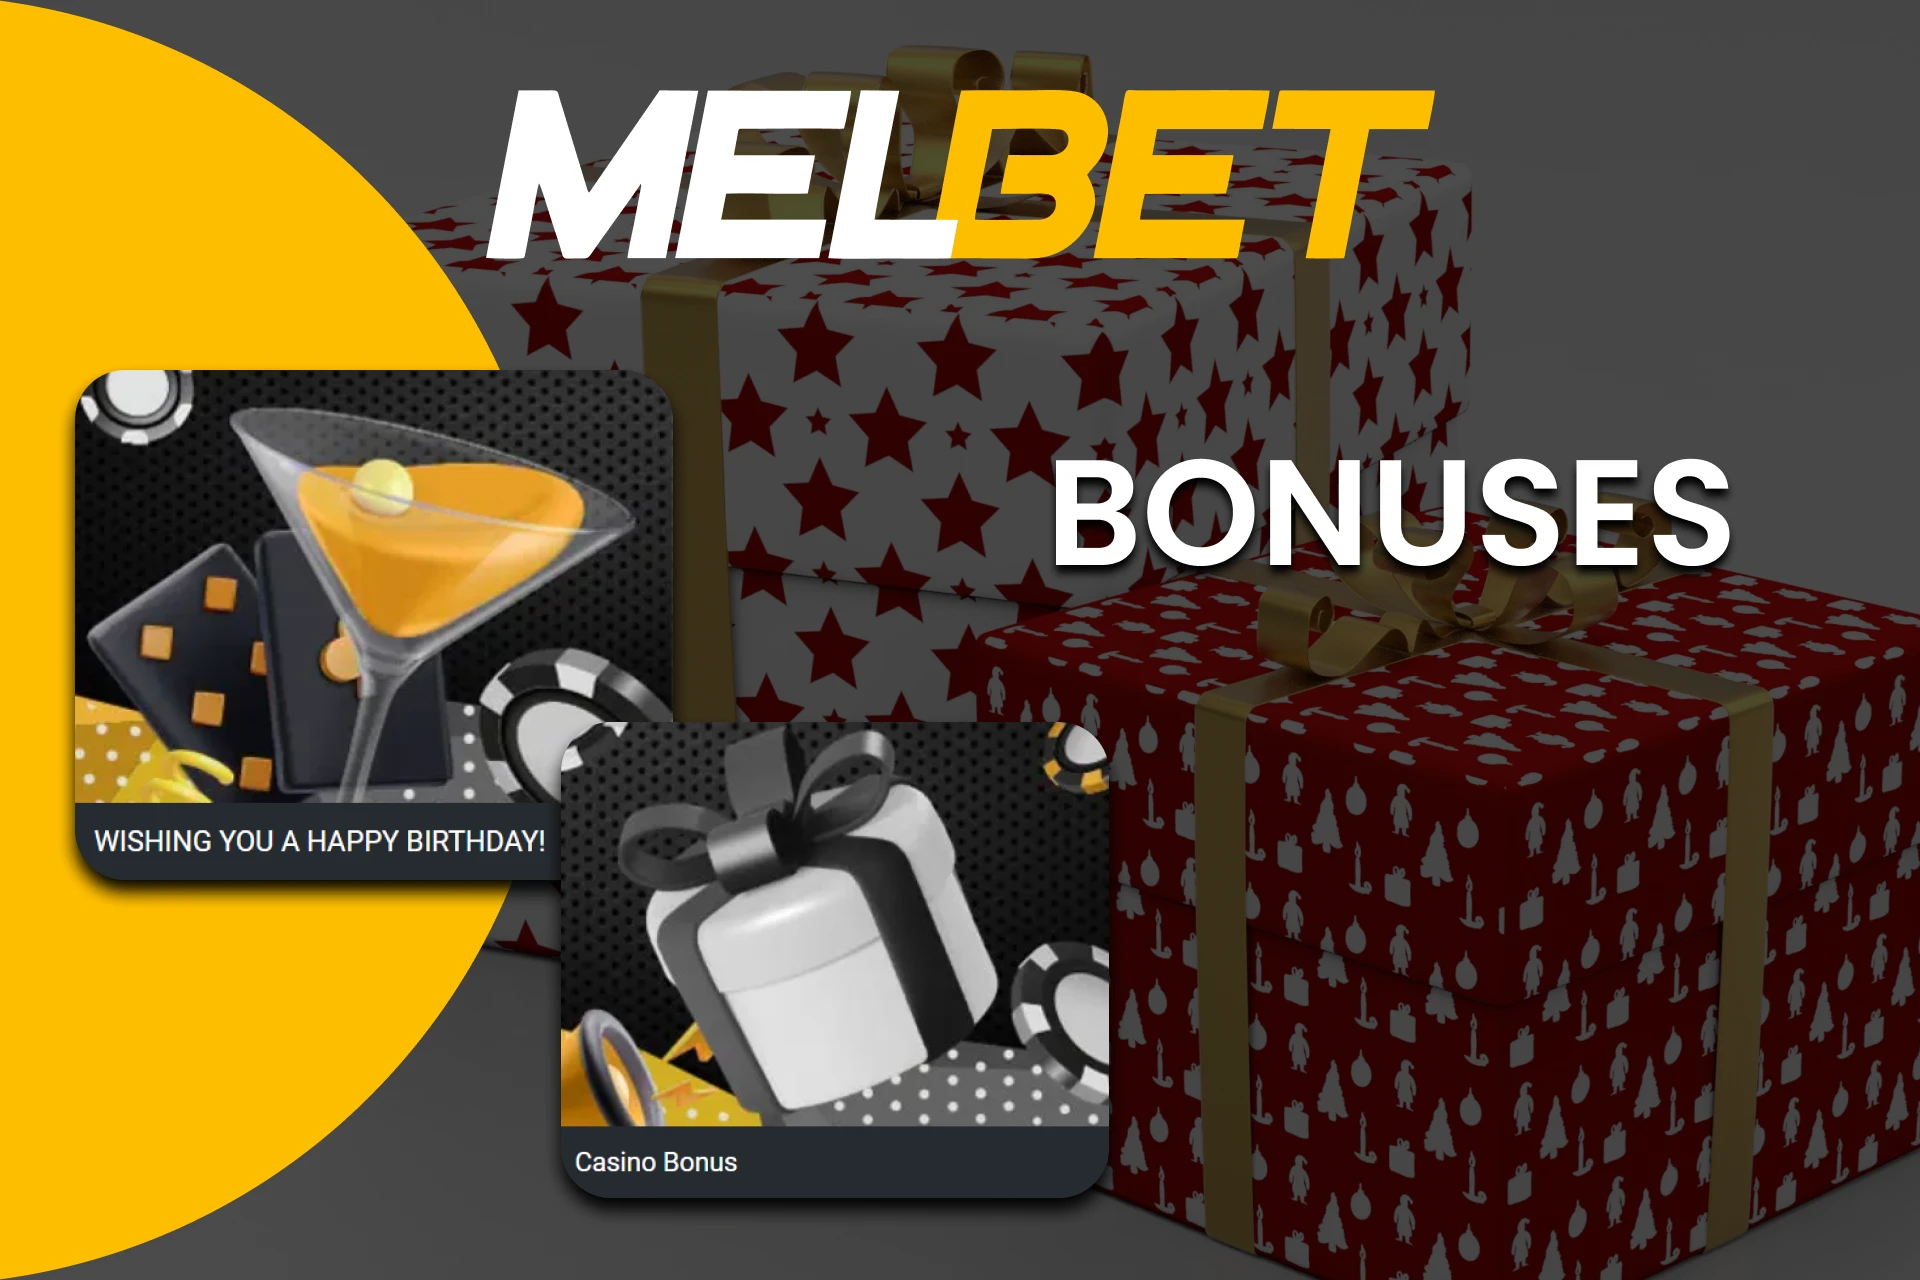 Get a gaming bonus from Melbet.